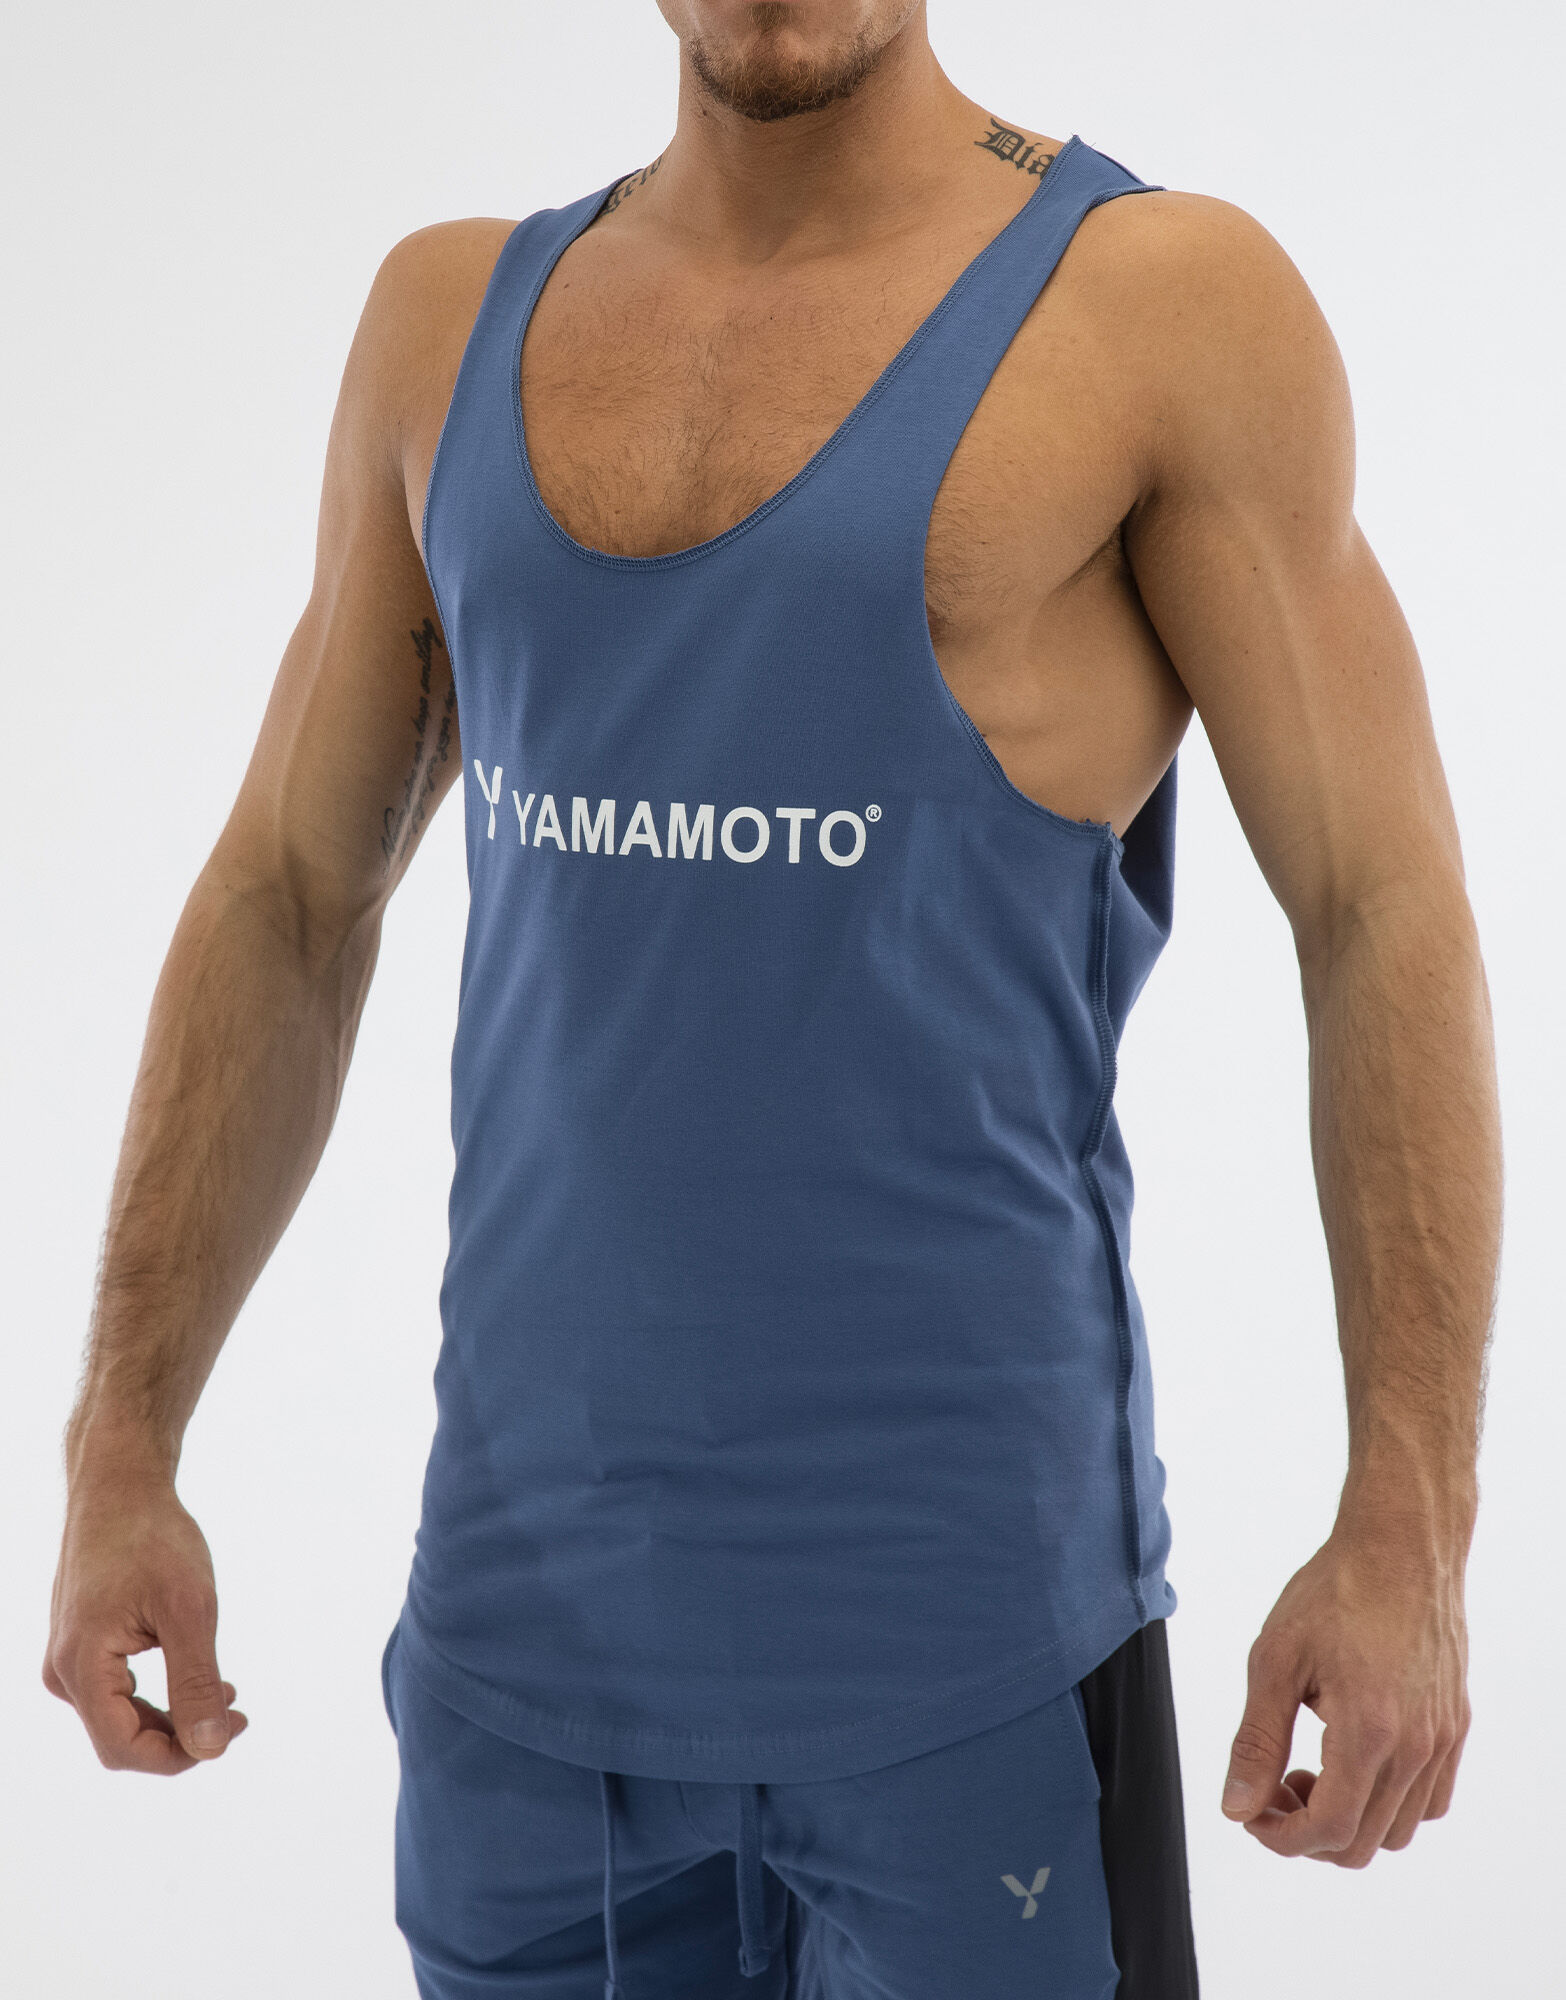 YAMAMOTO OUTFIT Man Tank Top Wide Shoulder Colore: Blu Xxxl